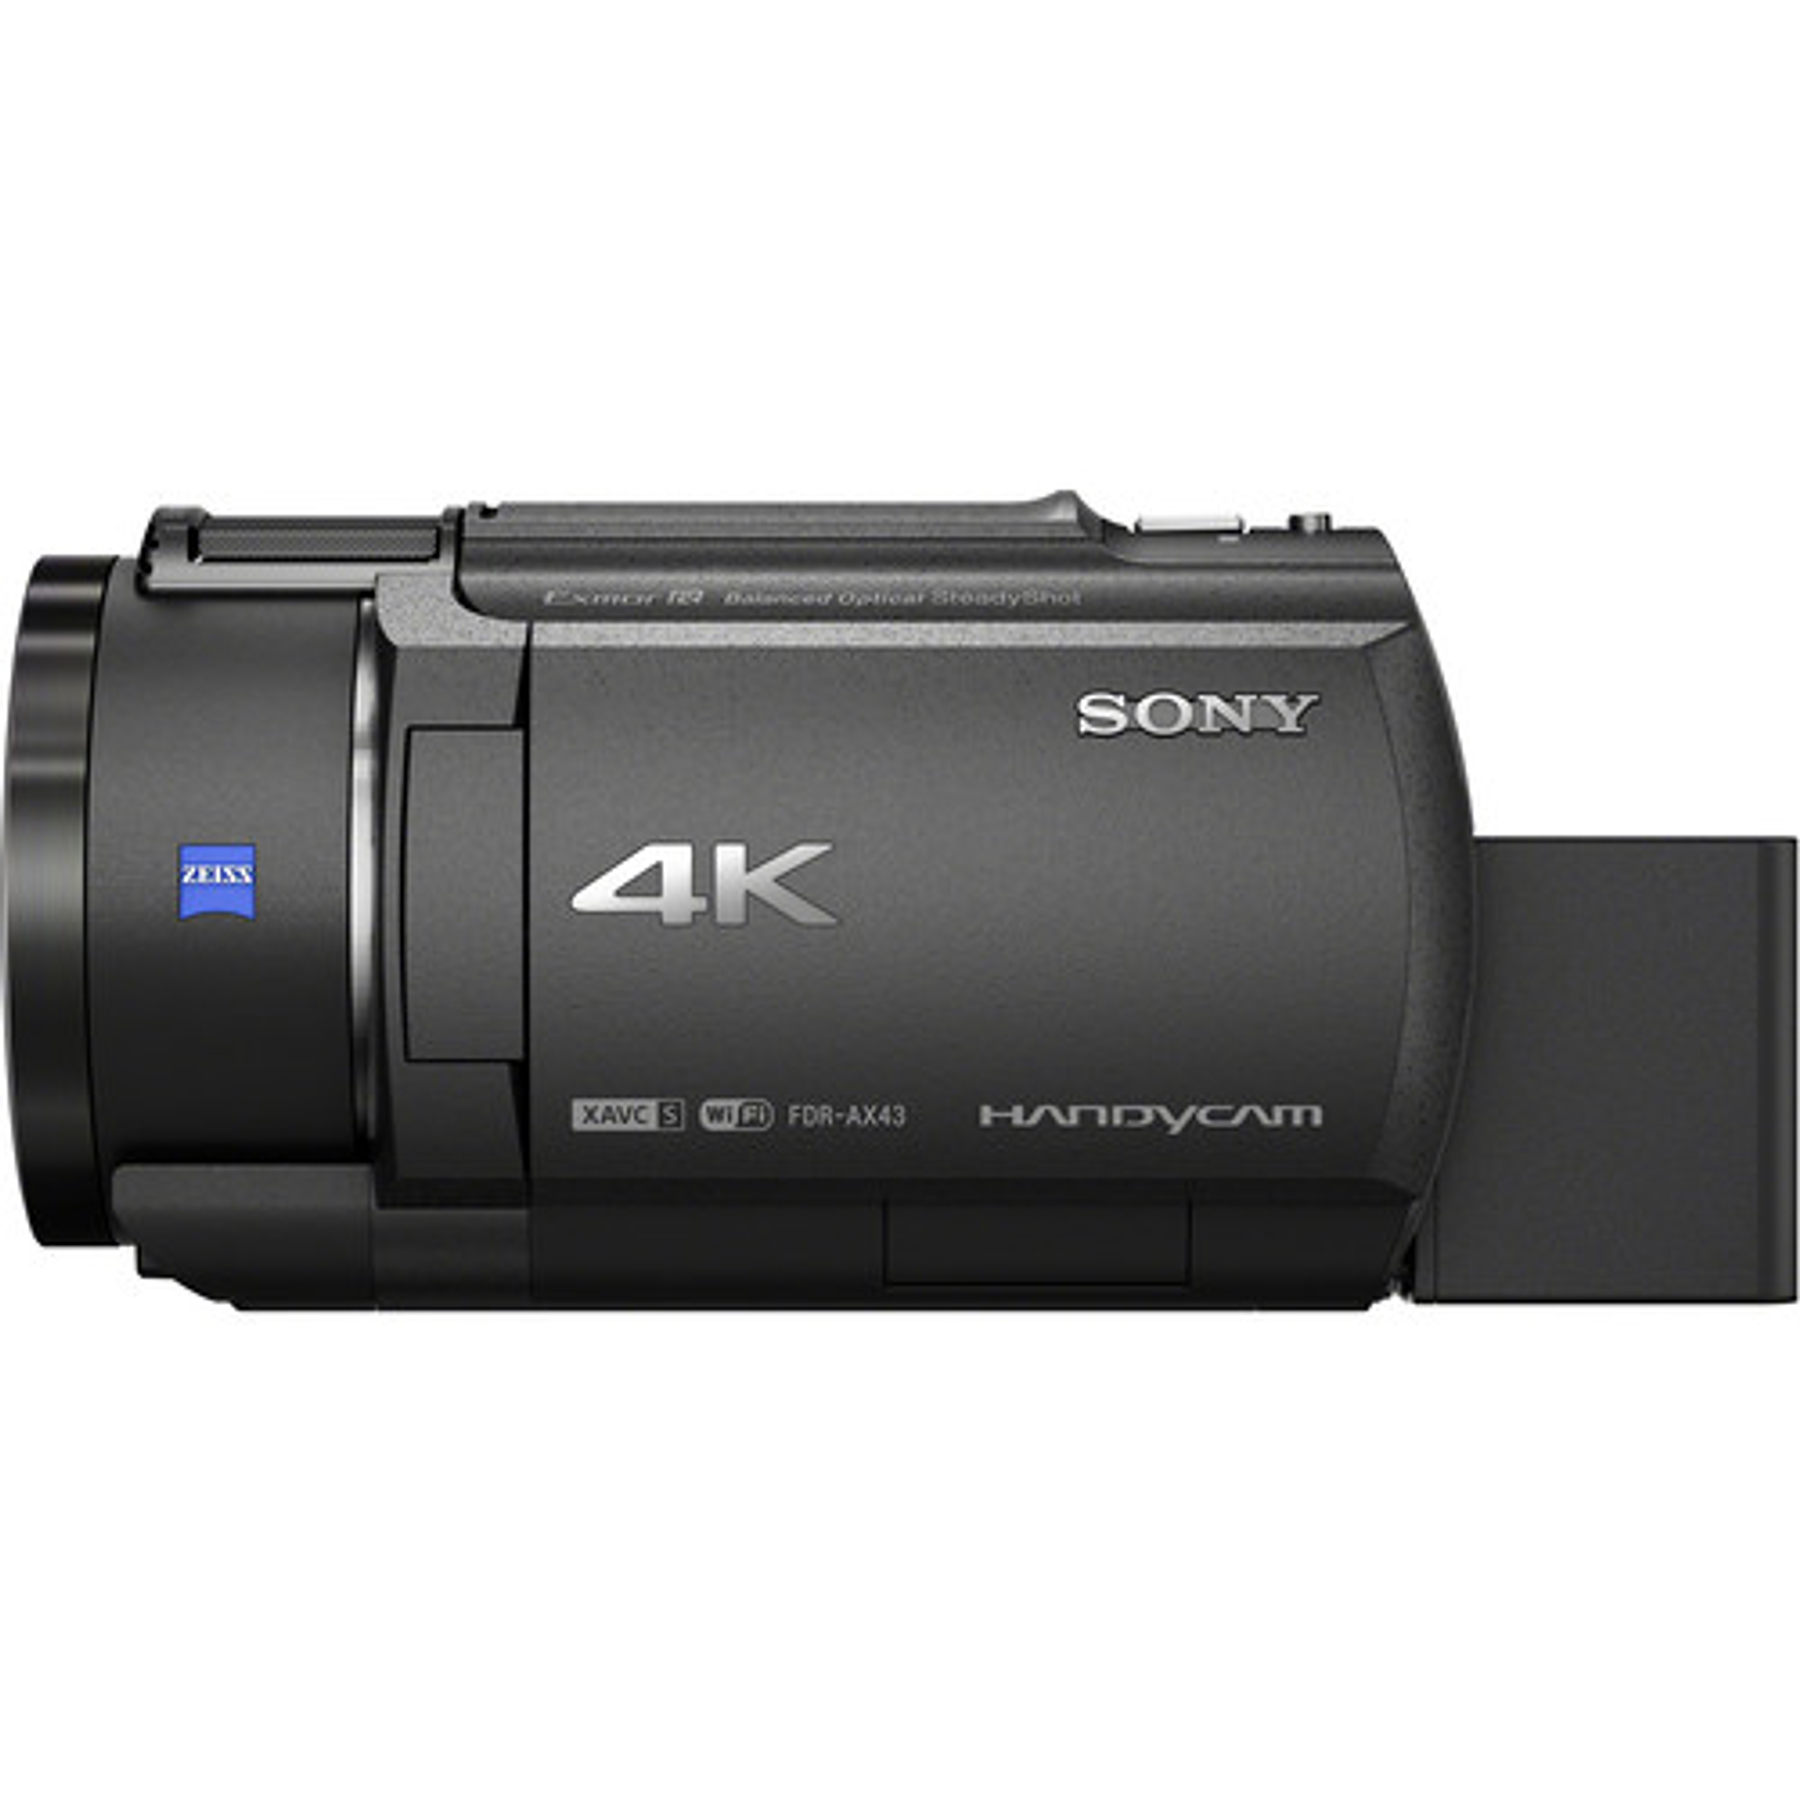 Sony AX43 4KHandycam